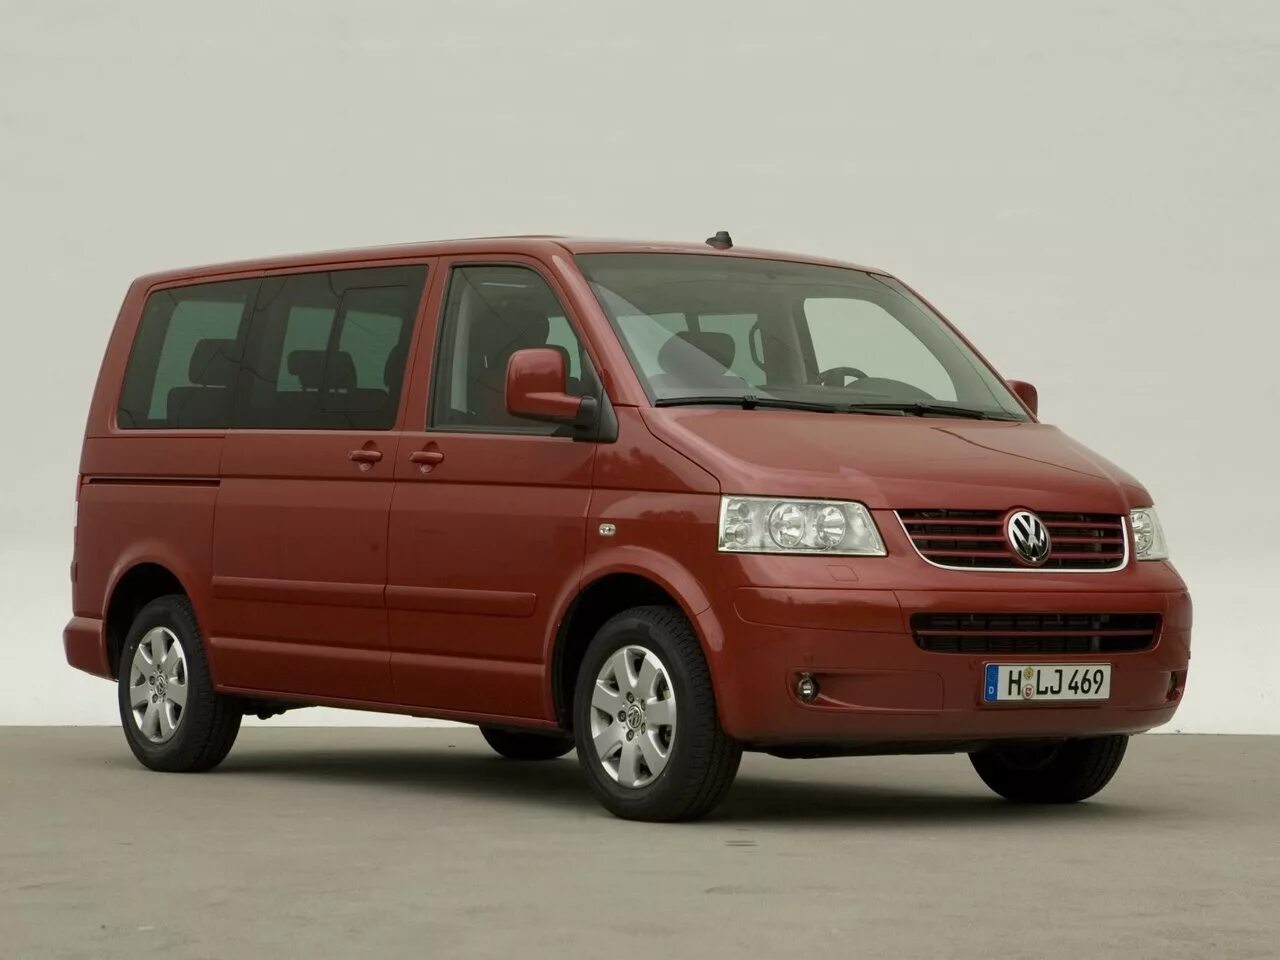 VW Multivan t5. Фольксваген Мультивен 2003. Volkswagen Multivan t5 (Minivan) 2003-2015. Multivan t5 2008. Модель т 5